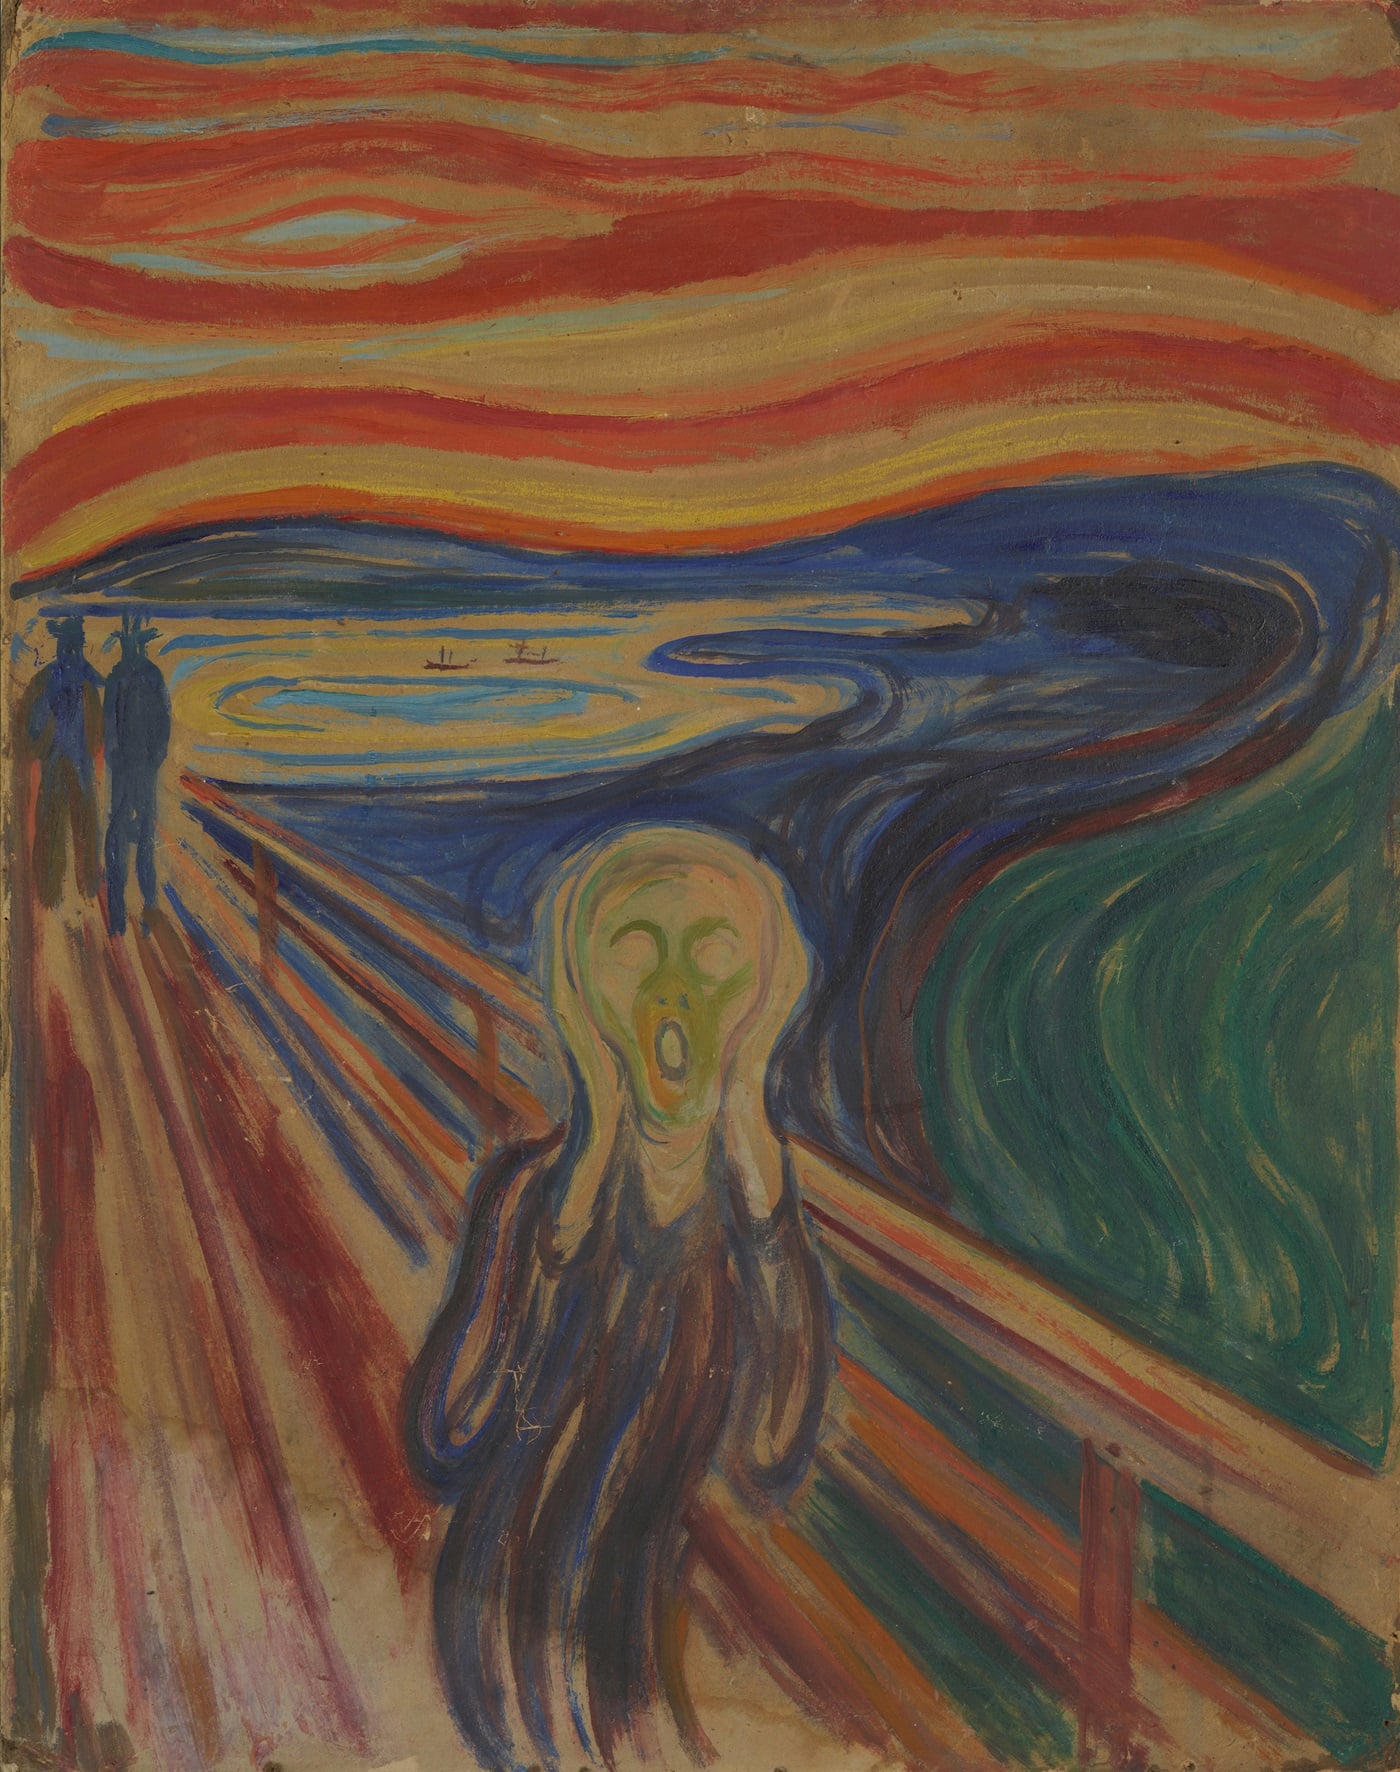 Skrik, Edvard Munch